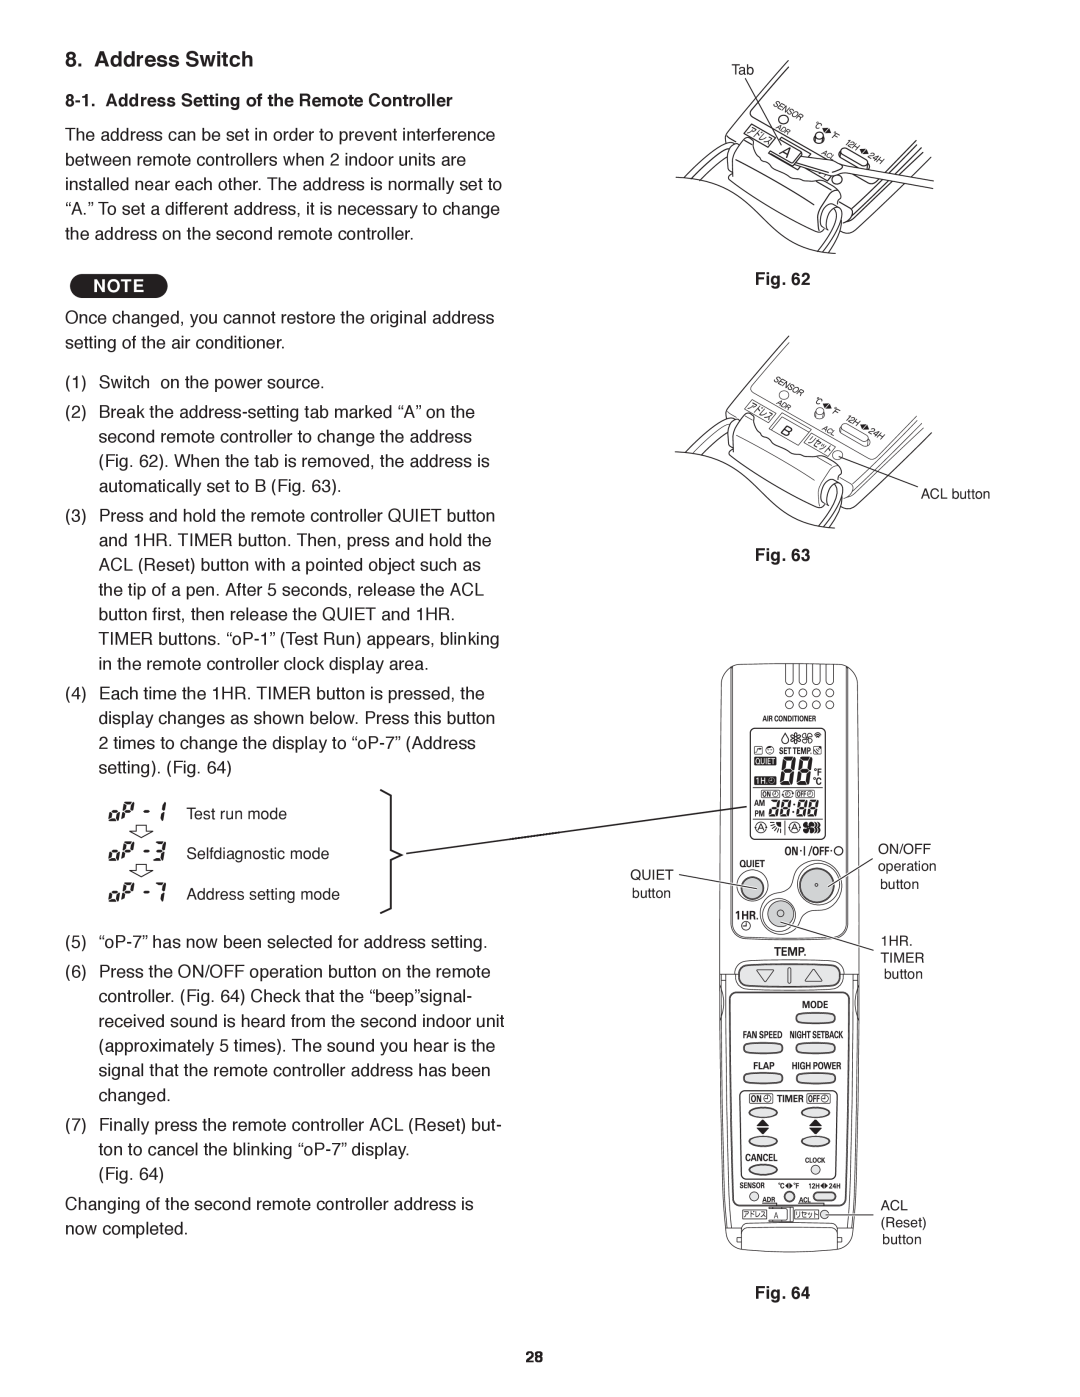 Panasonic CS-KS24NKU, CU-KS24NKUA service manual Address Switch, Address Setting of the Remote Controller, Fig 